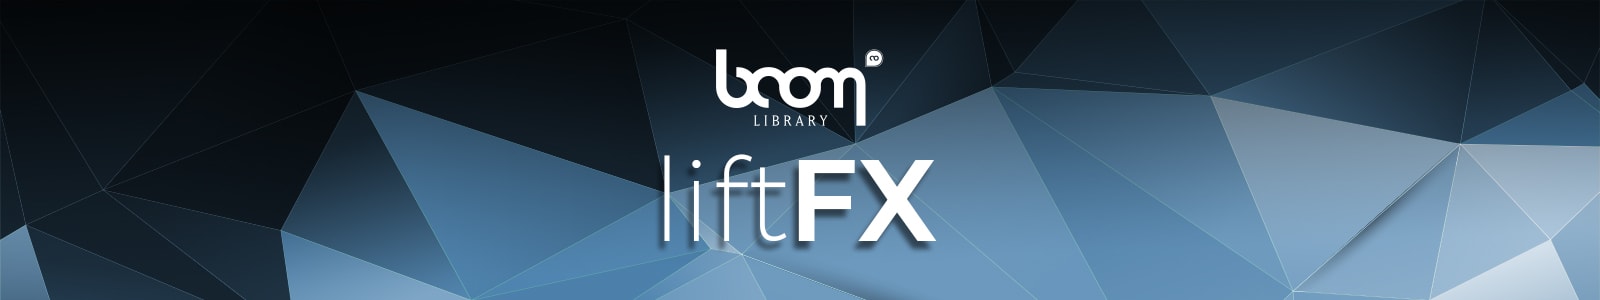 Boom Library liftFX